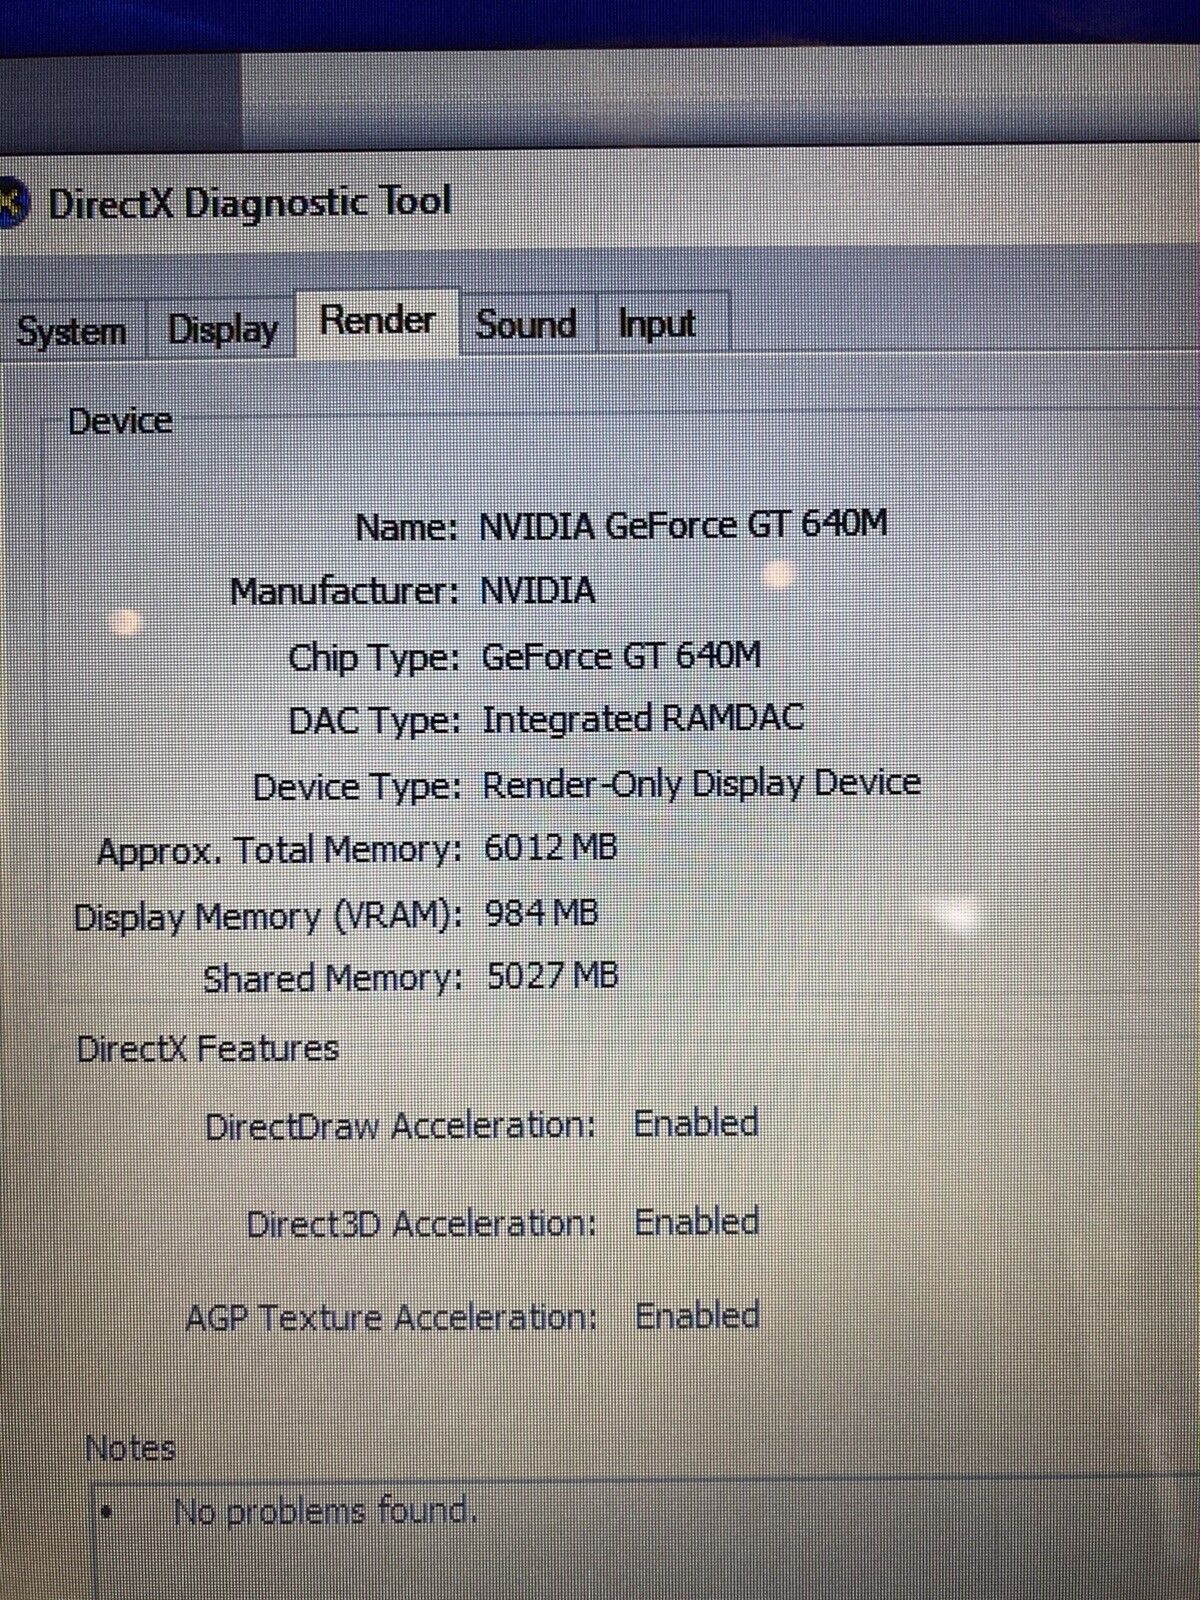 Acer Laptop Reflective Camo Cover Deficyt super cena specjalna, bardzo popularna